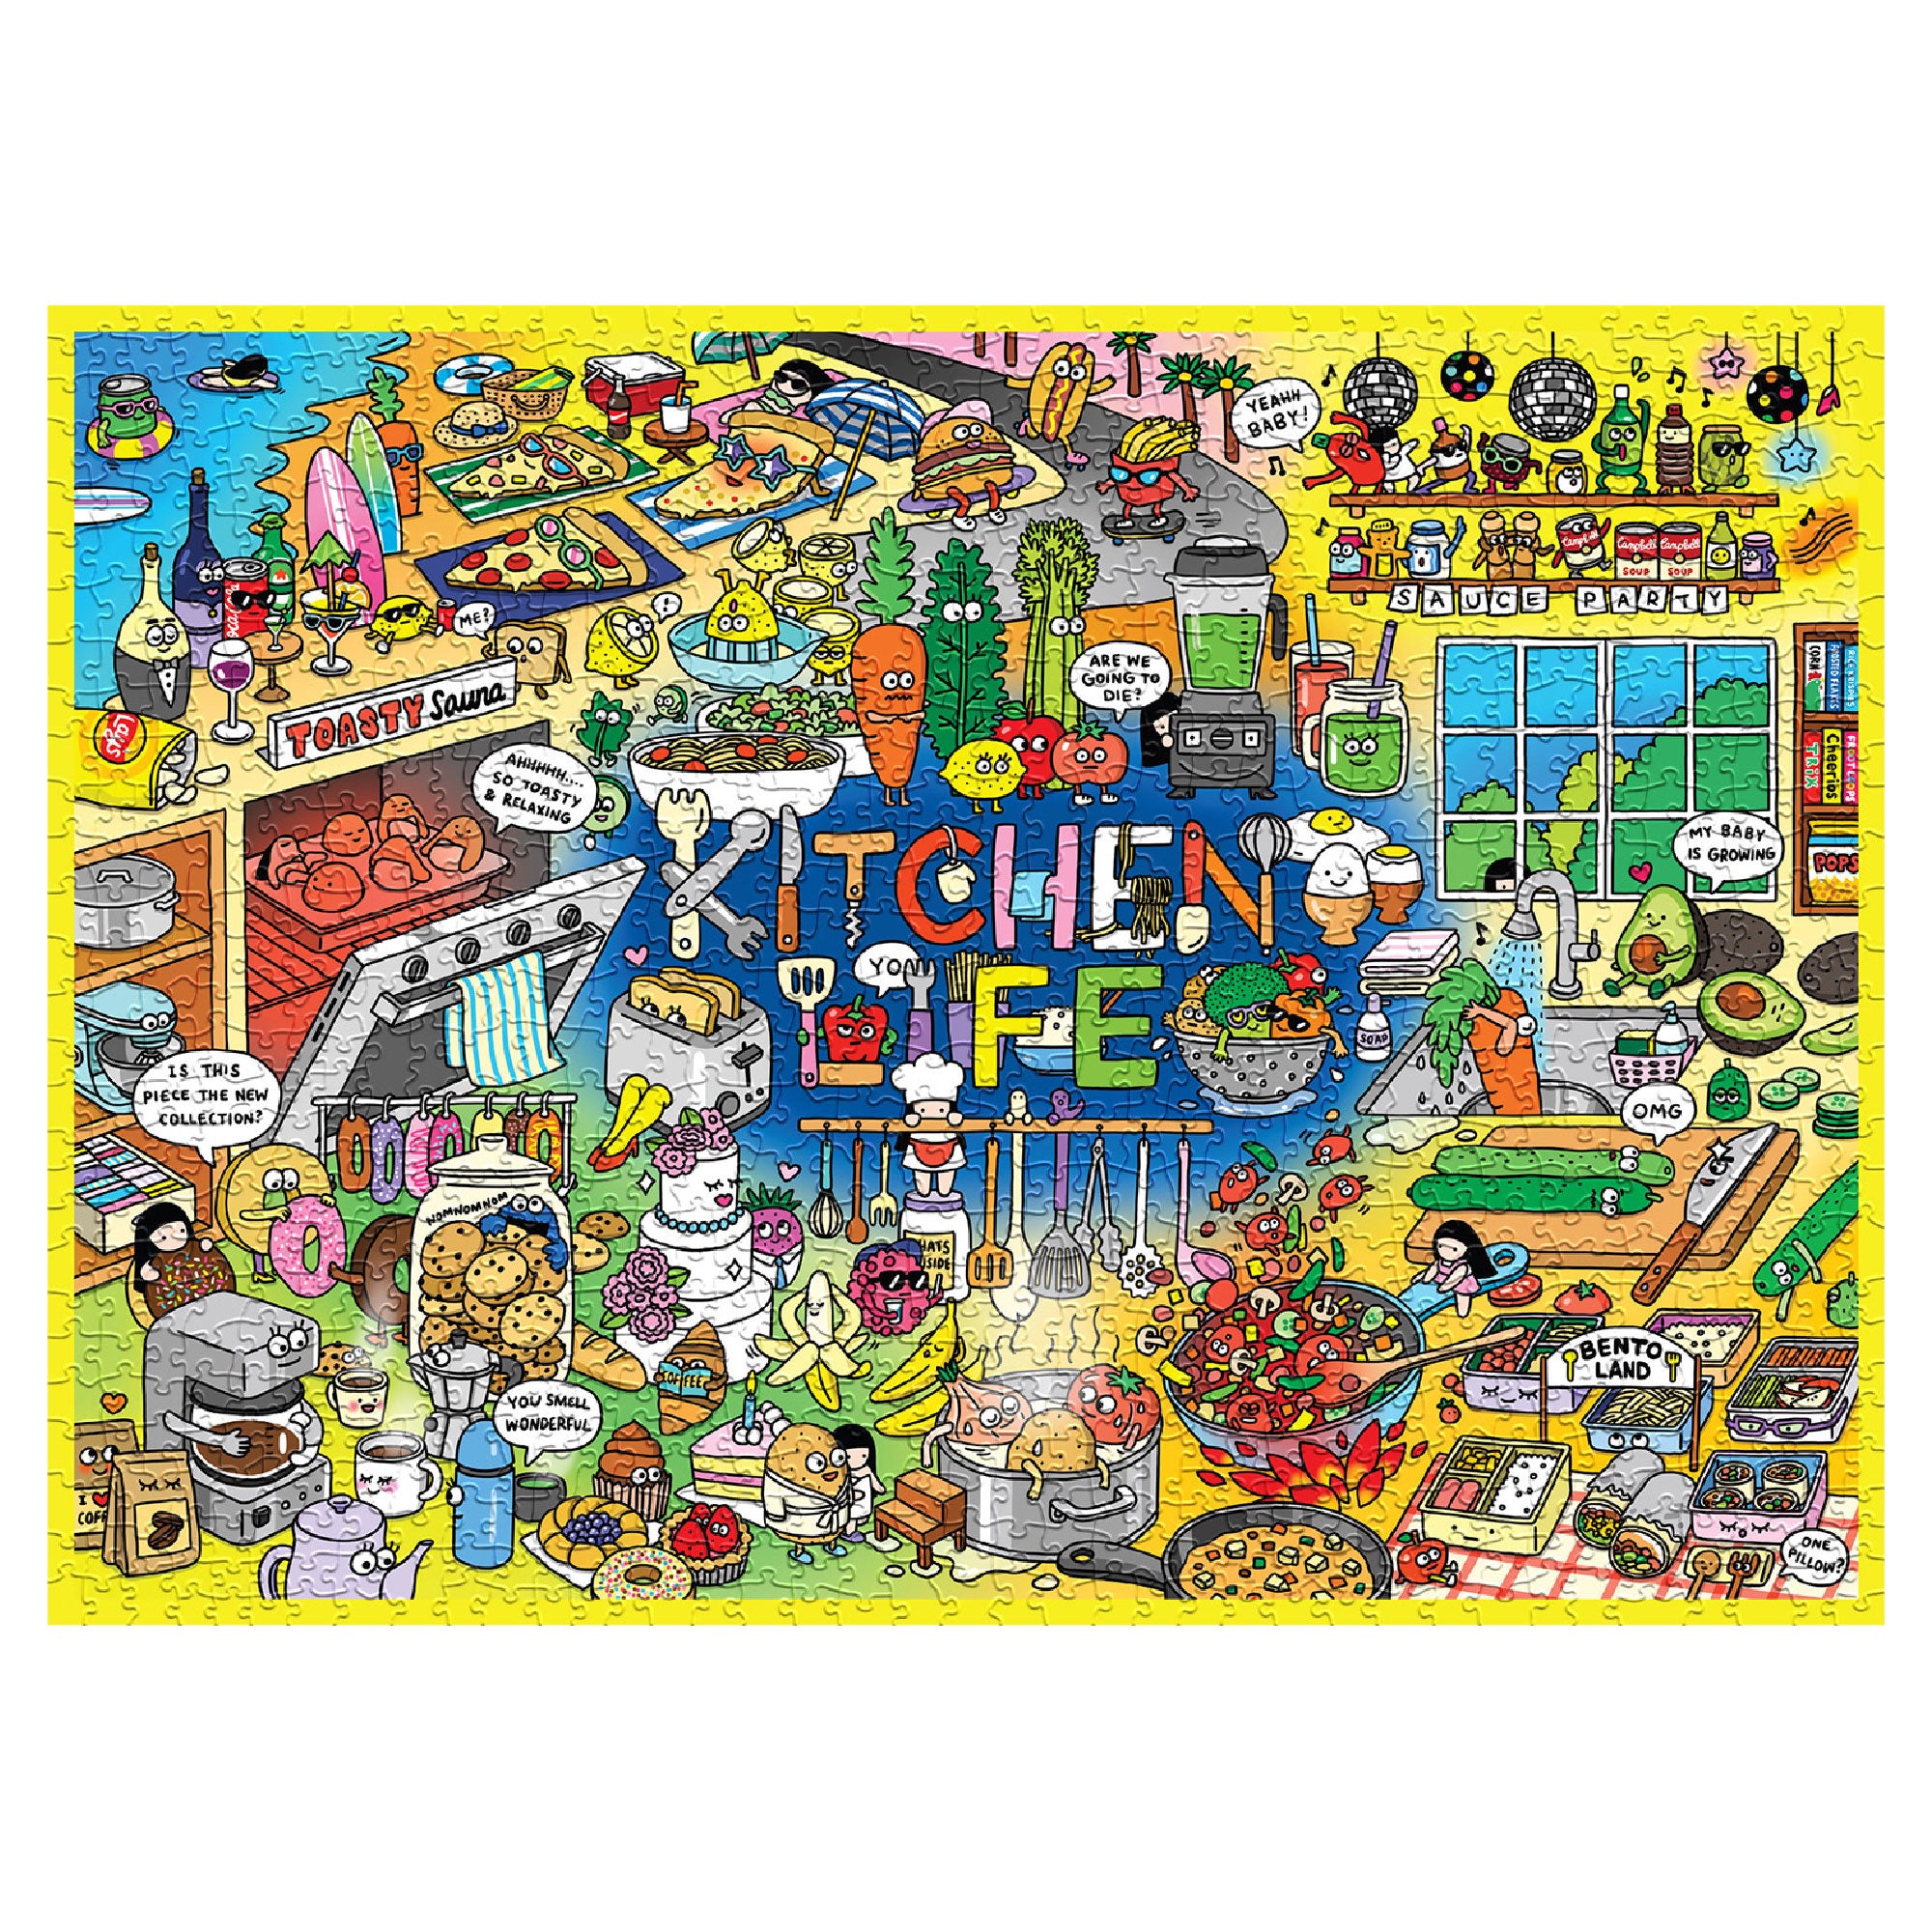 SOONNESS critter bundle cartoon illustration 1000 piece puzzle Soon Cho Kitchen Life